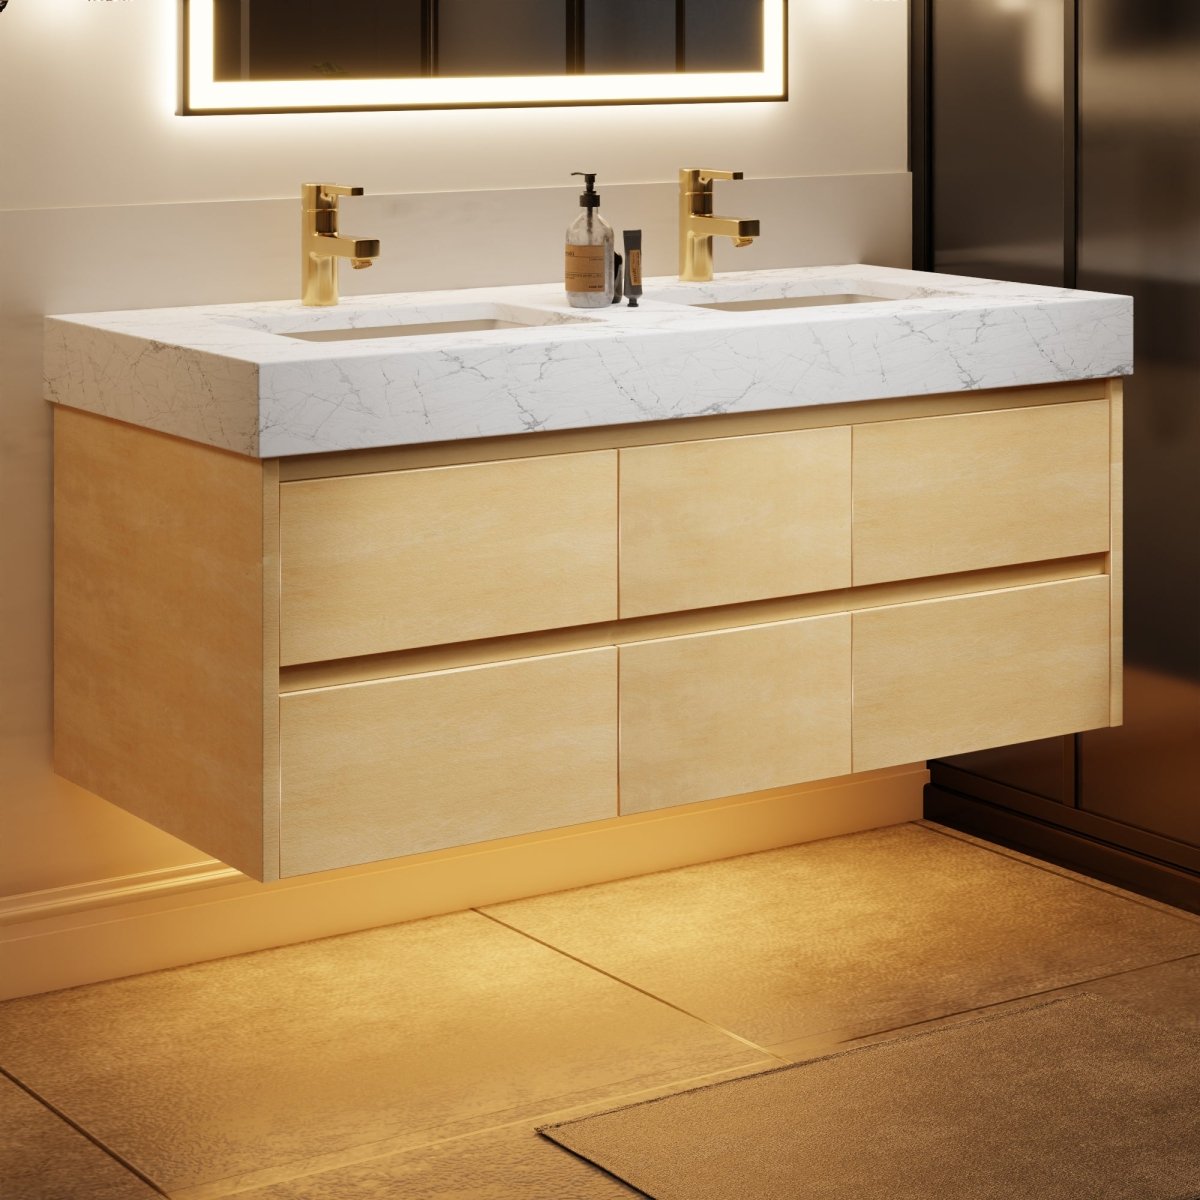 Sleek 48" Modern Floating Maple wood Bathroom Vanity Cabinet with with Lights and Stone Slab Countertop, Dual Sinks